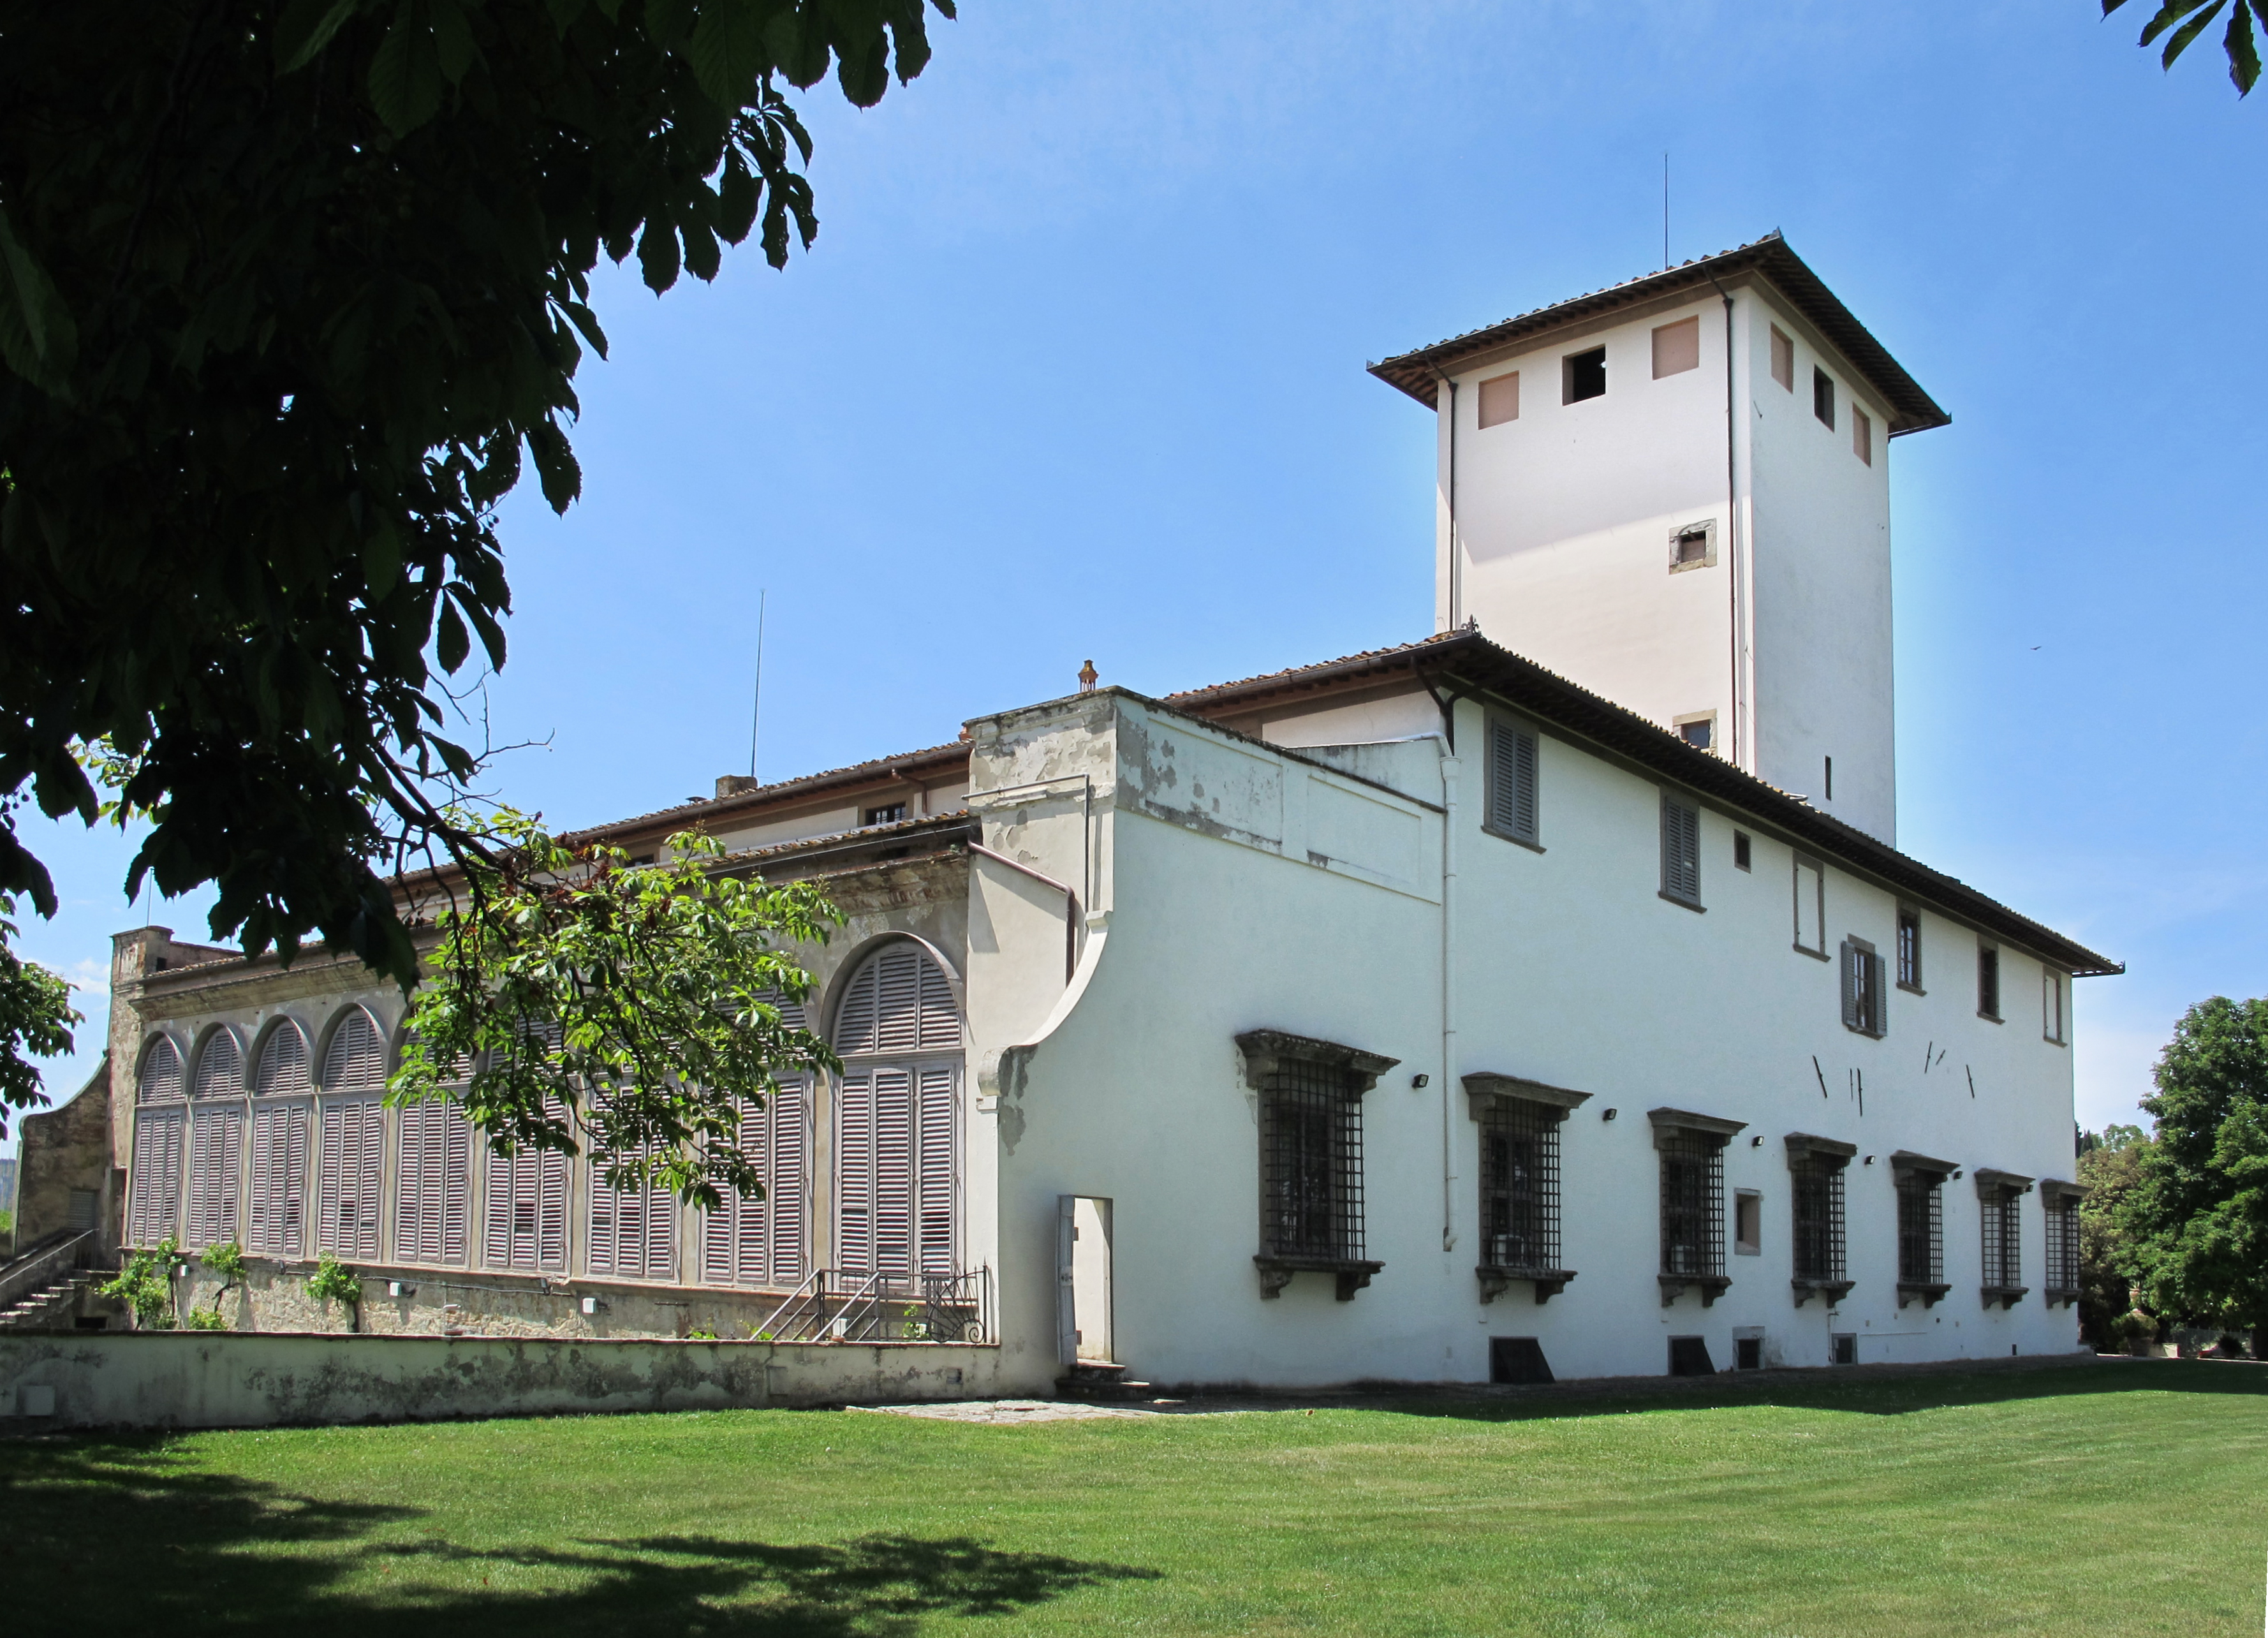 Villa Corsini a Mezzomonte, Impruneta